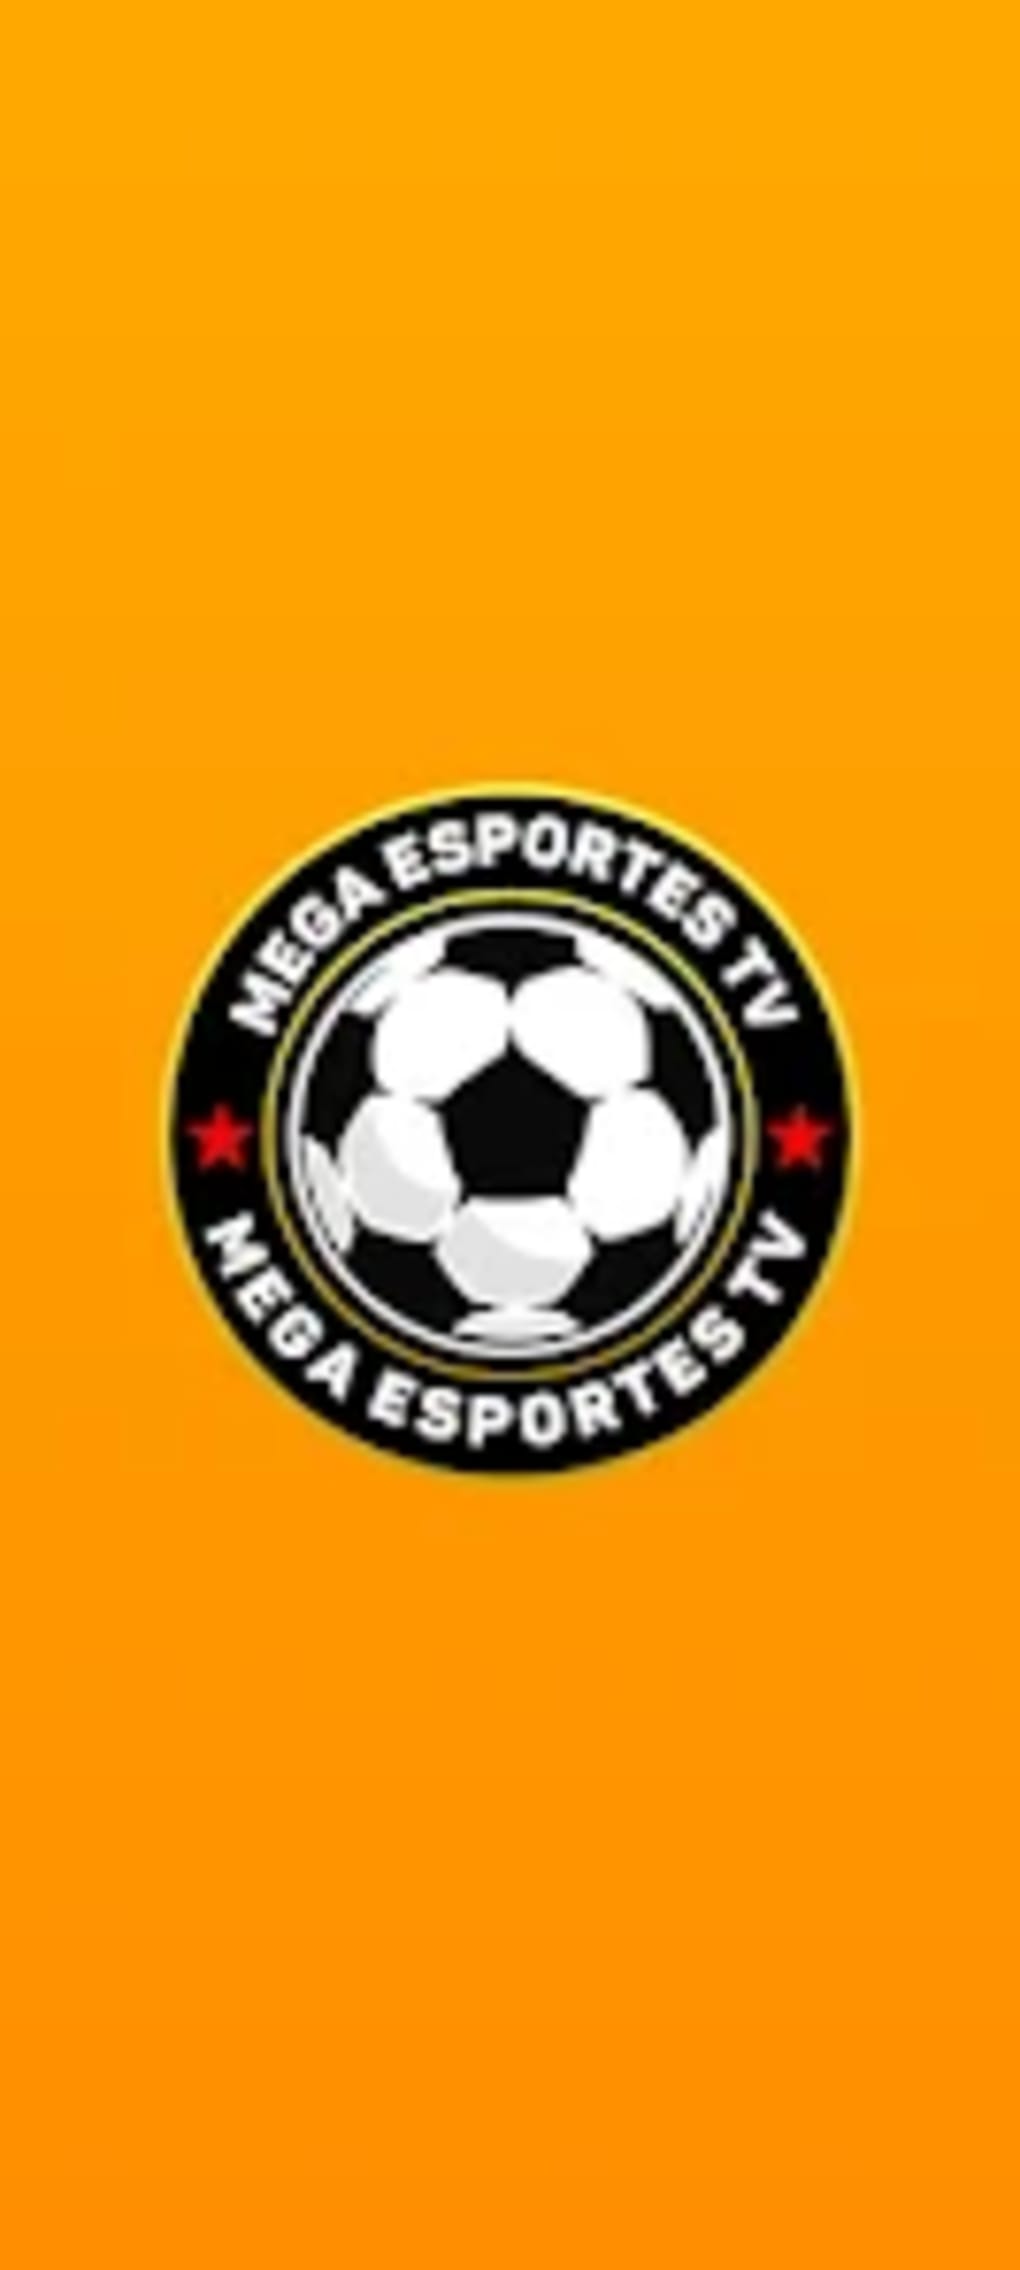 Mega Futebol Online versão móvel andróide iOS apk baixar